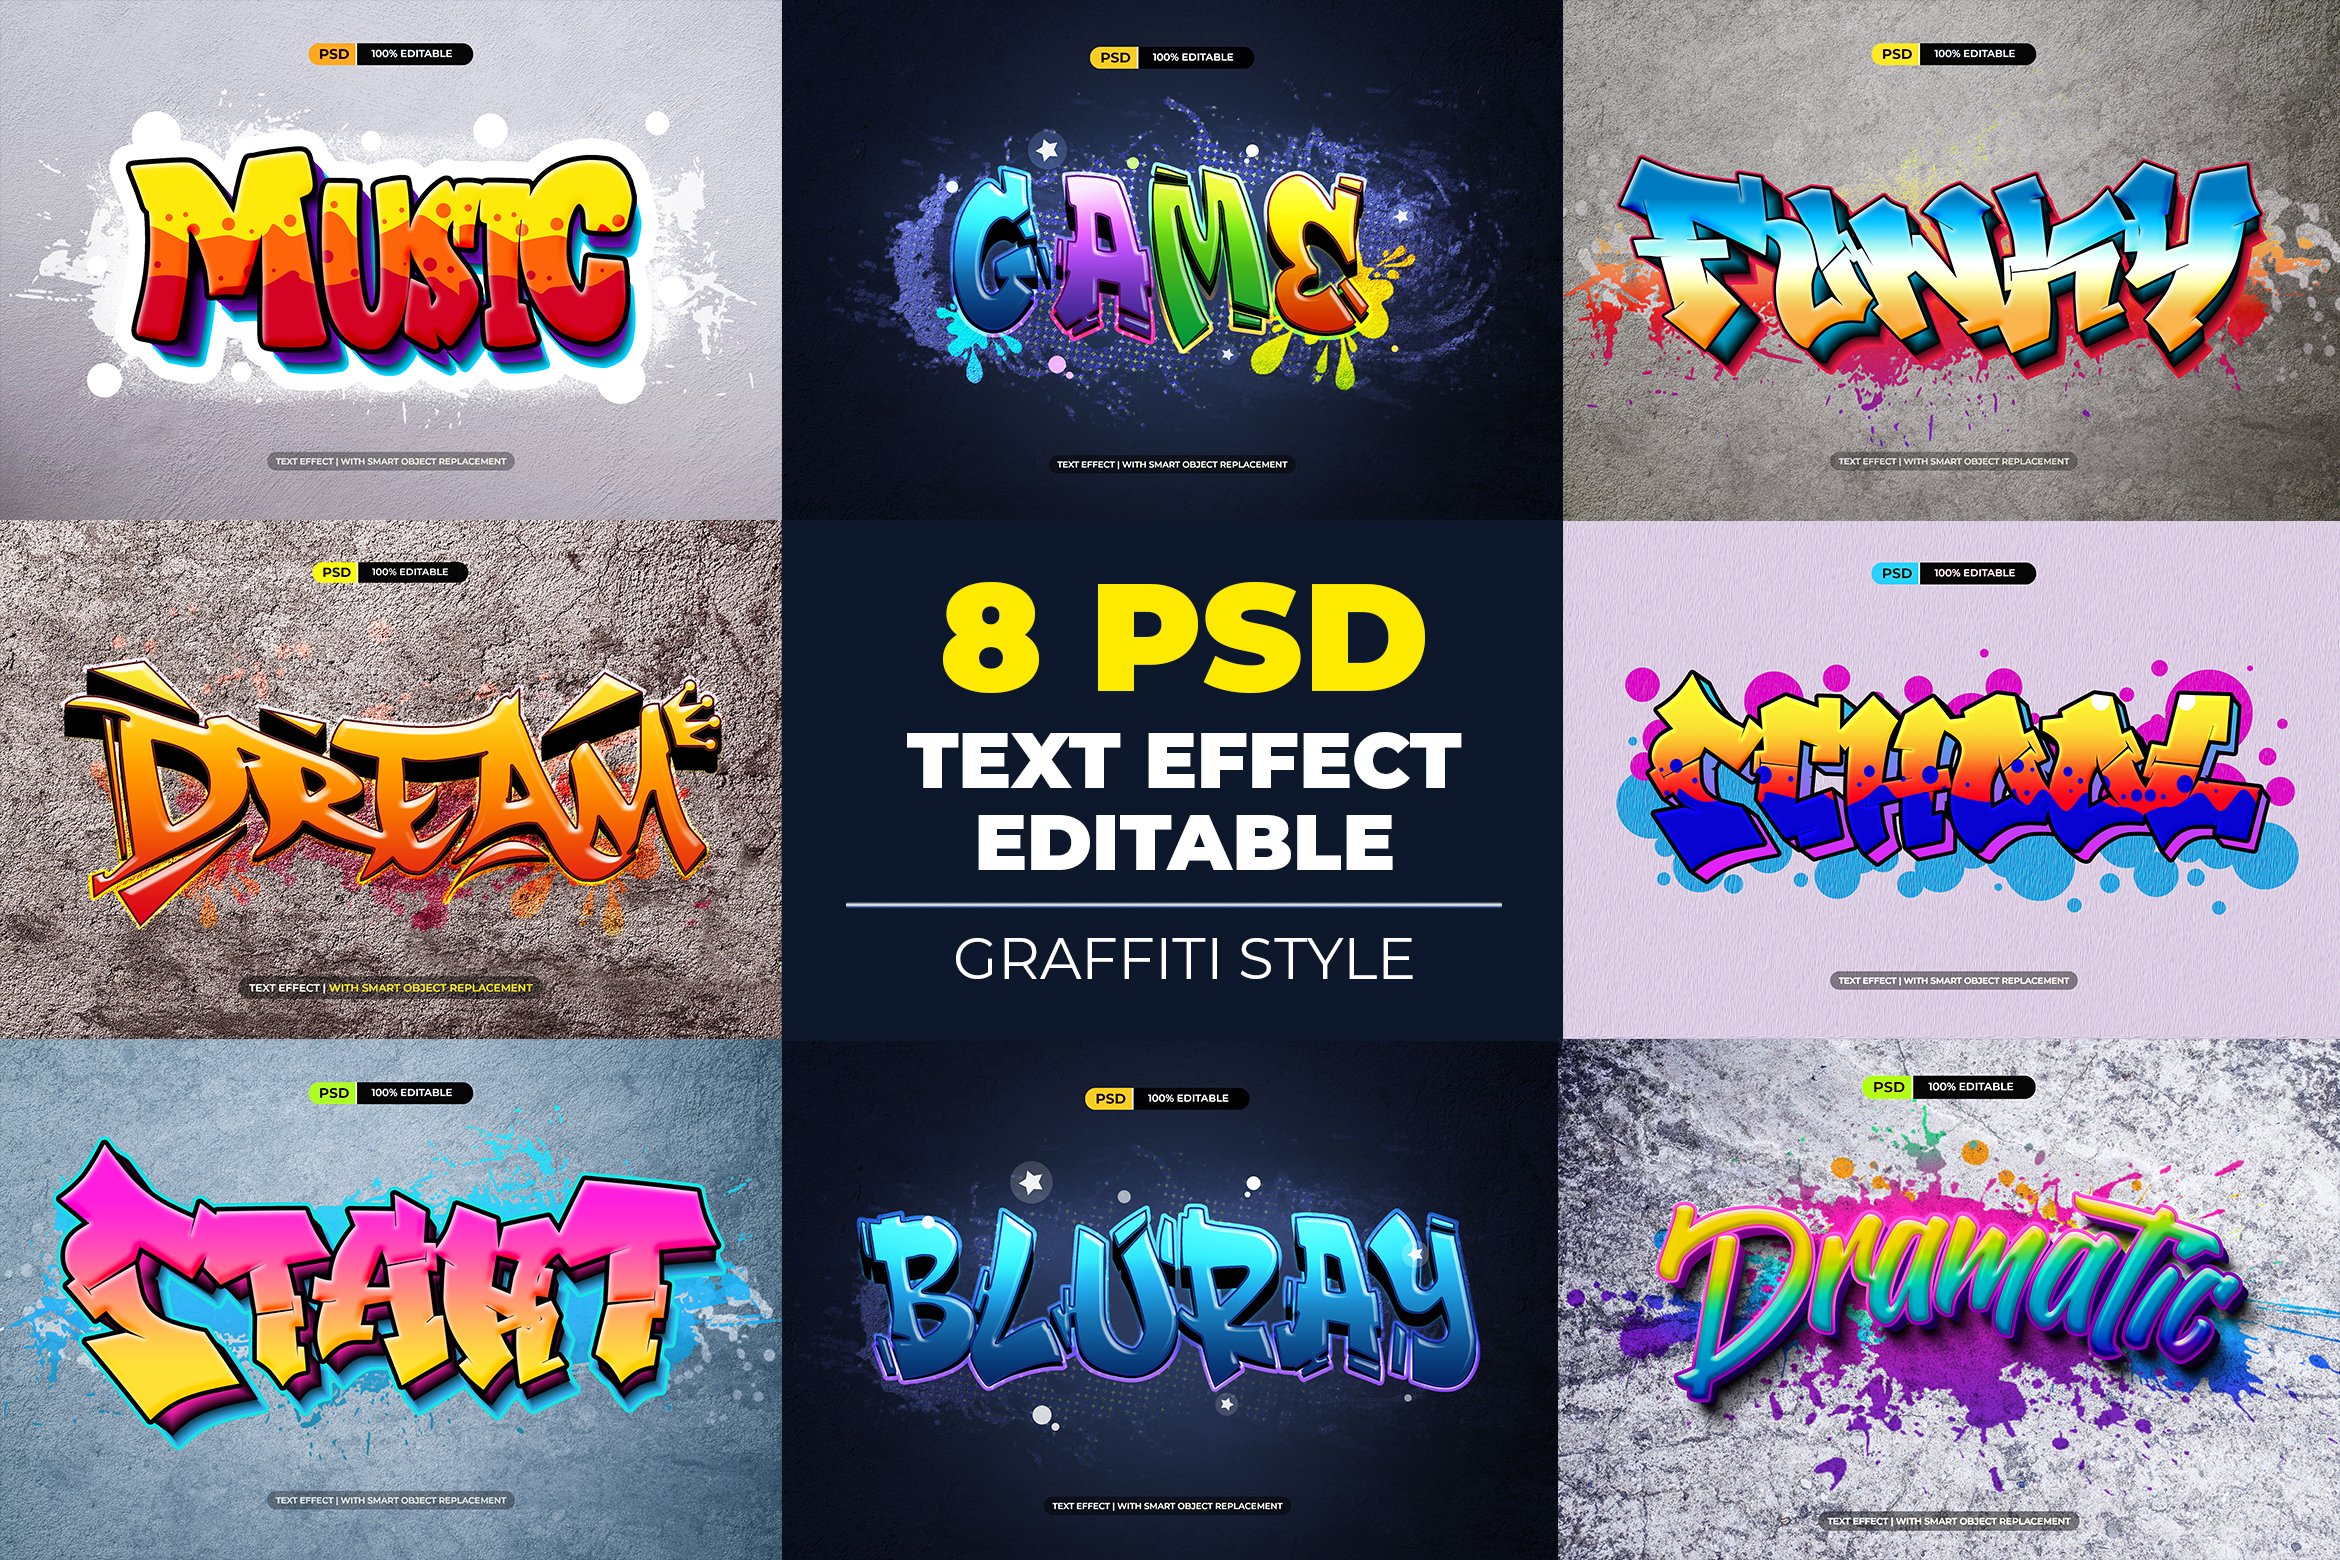 Graffiti PSD Text Effect Bundlecover image.